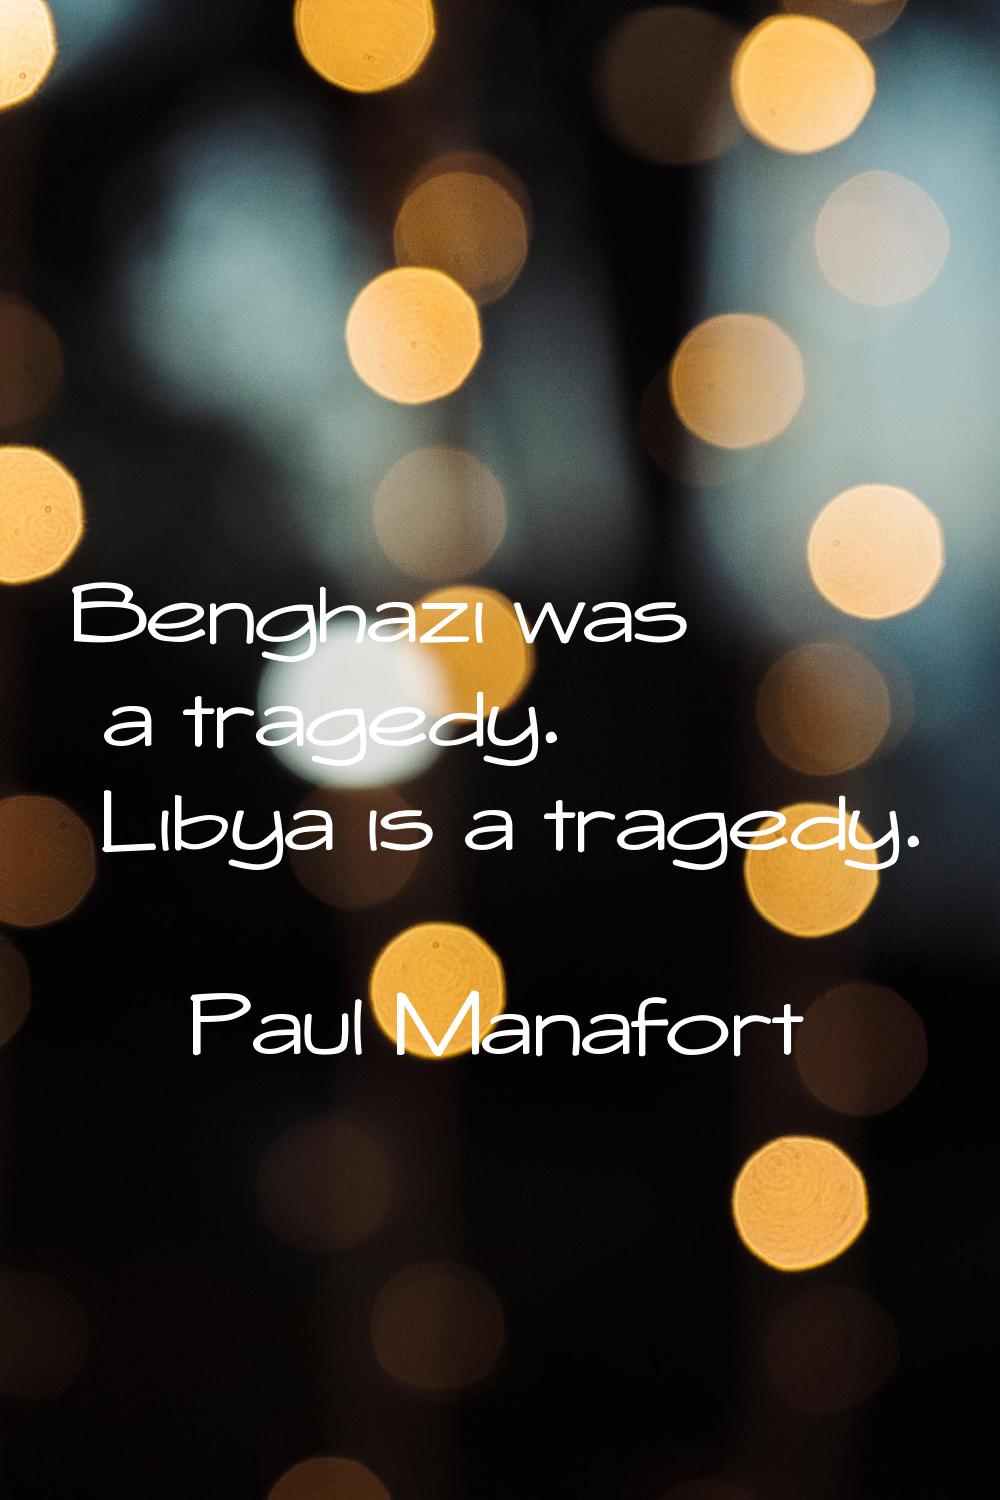 Benghazi was a tragedy. Libya is a tragedy.